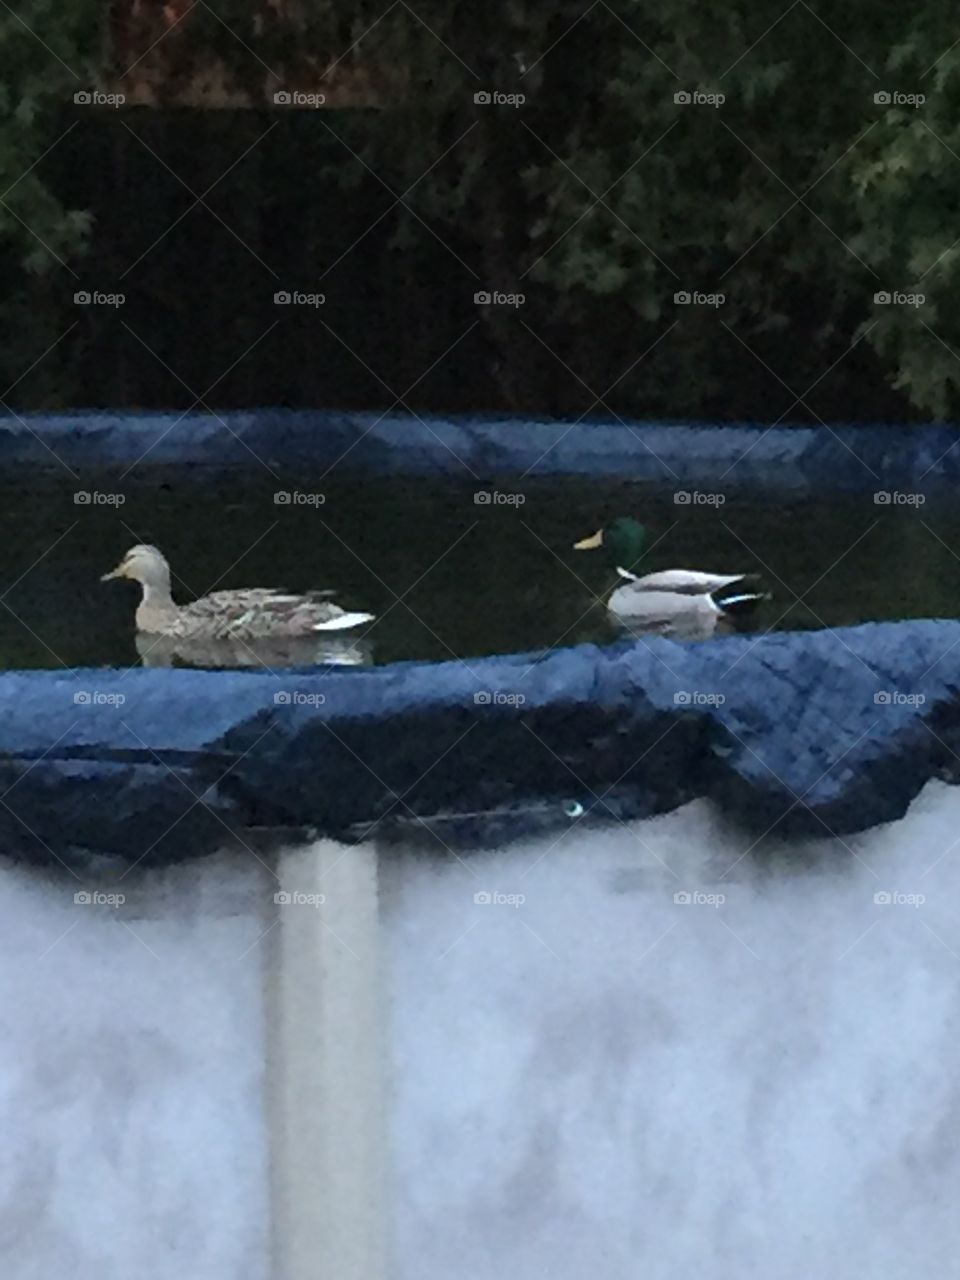 Ducks in a pool